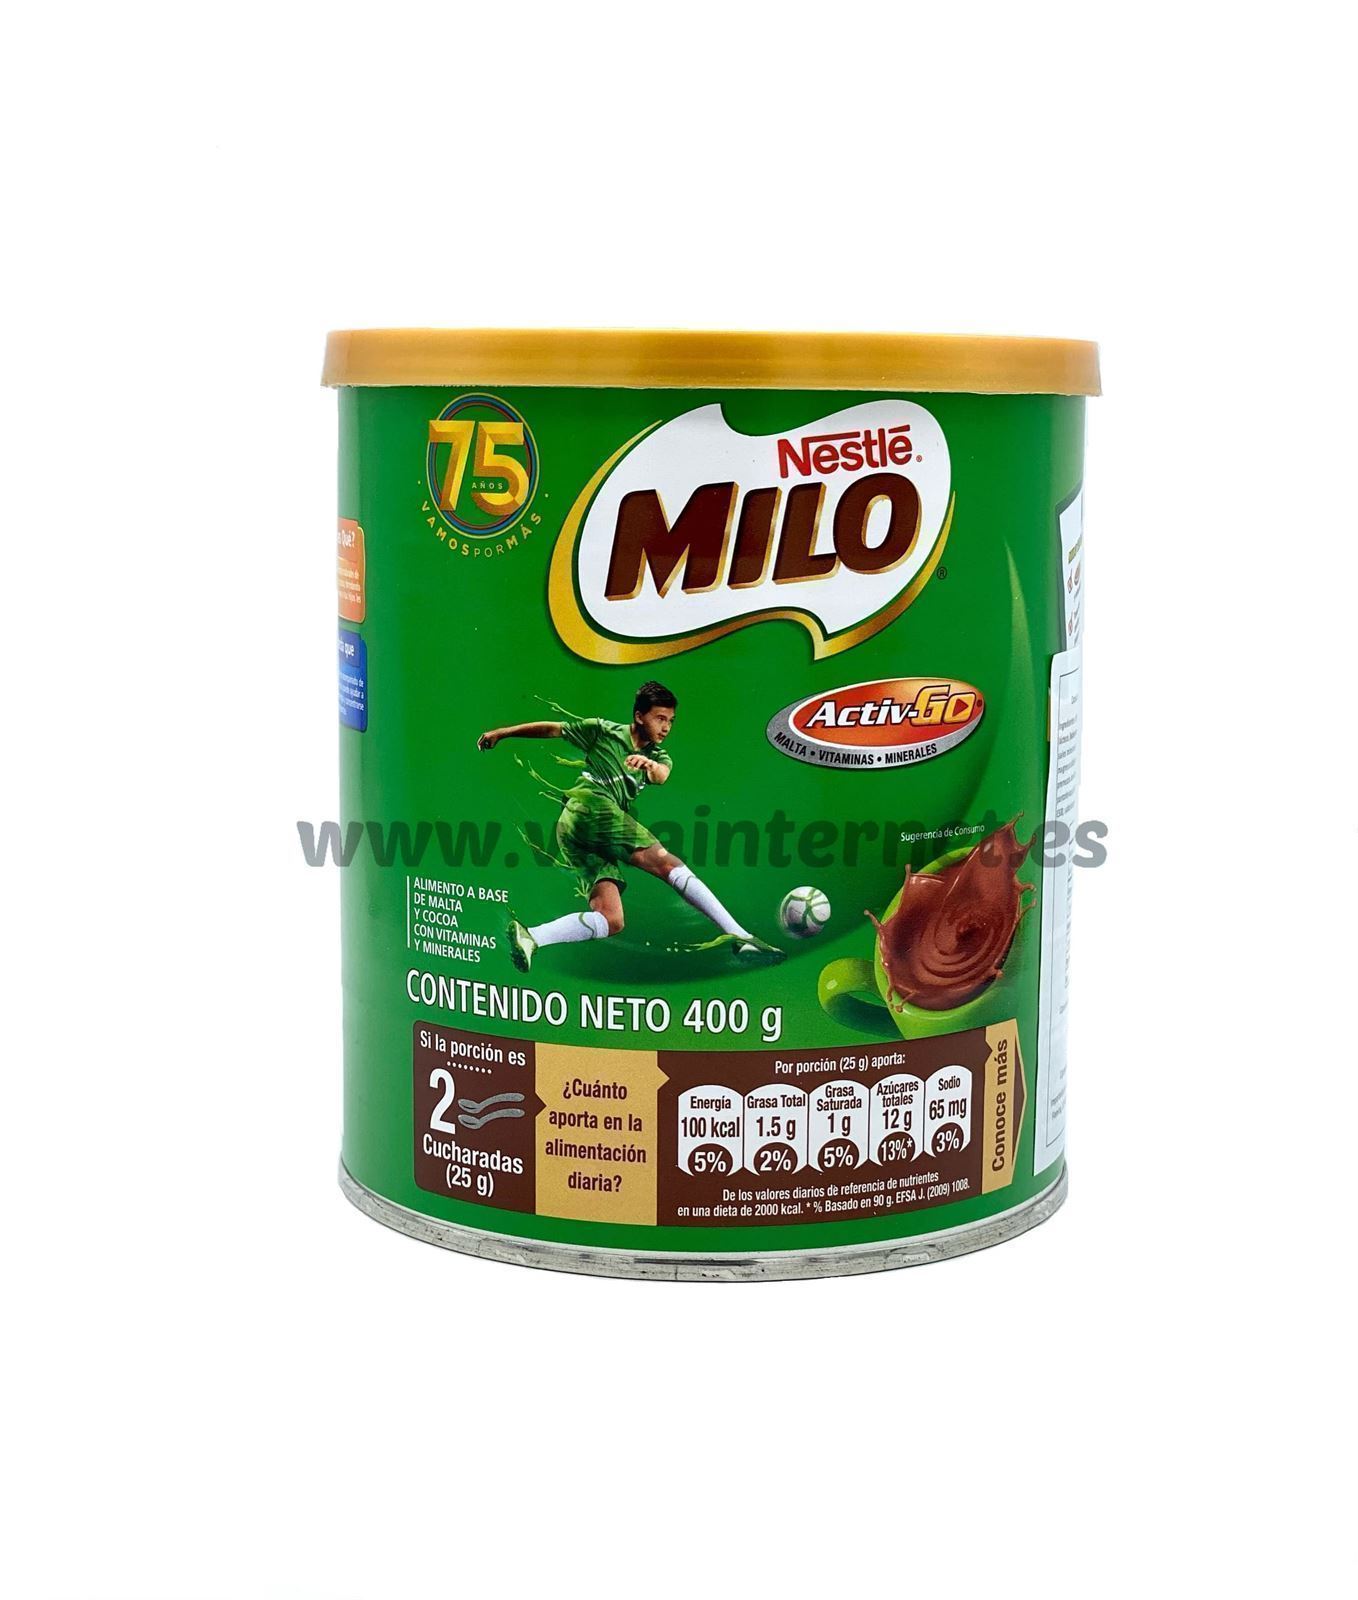 Milo Colombia 400g - Imagen 1